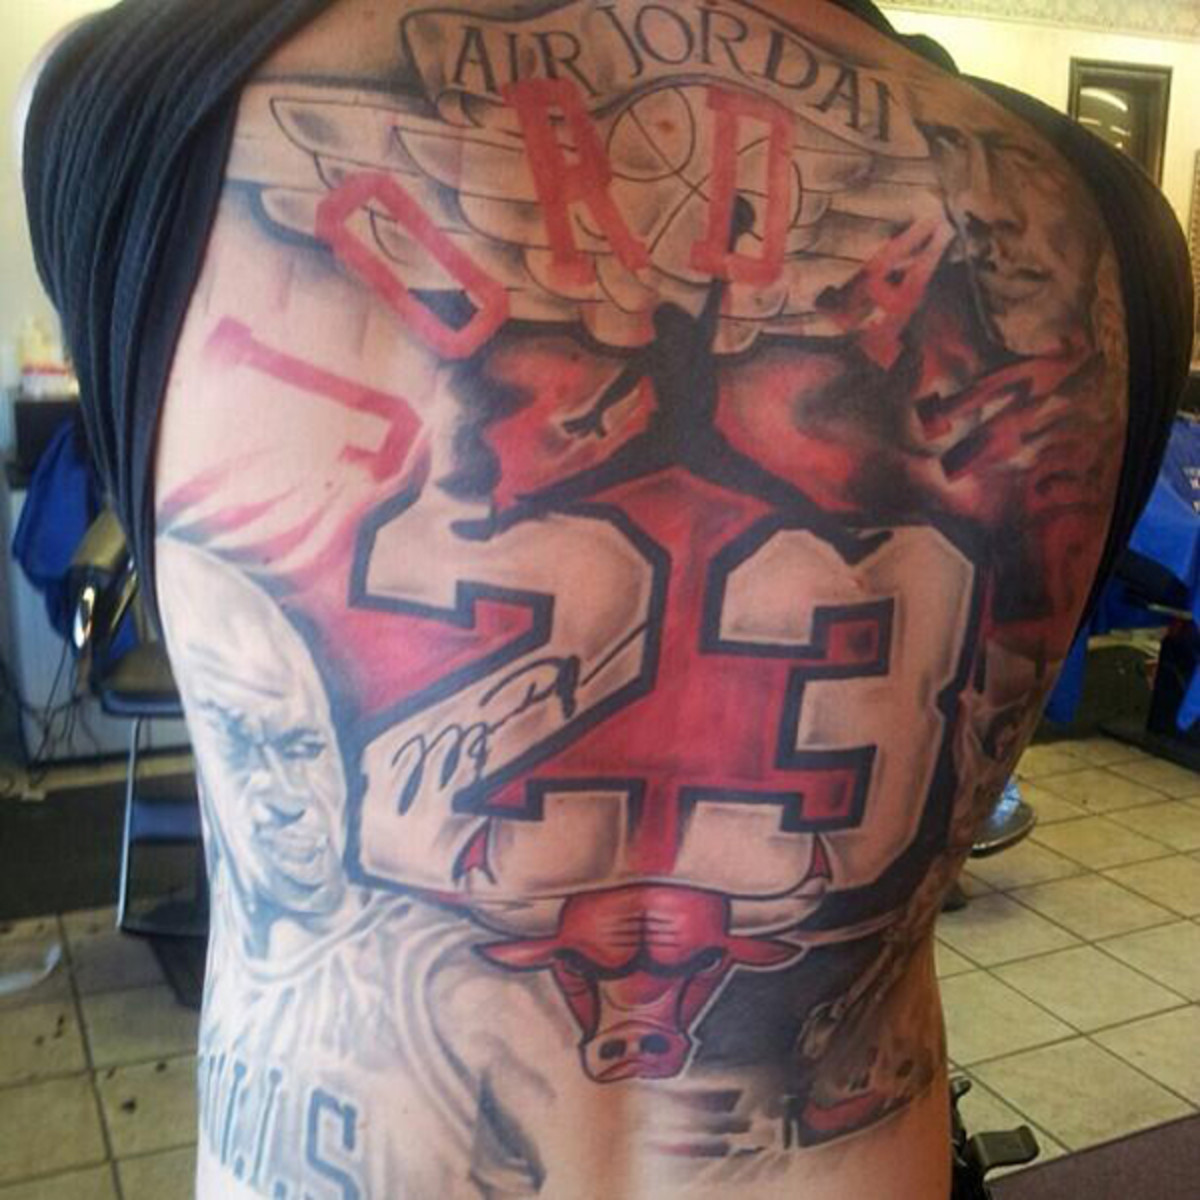 Michael Jordan tribute tattoo mural covers fan's entire back.